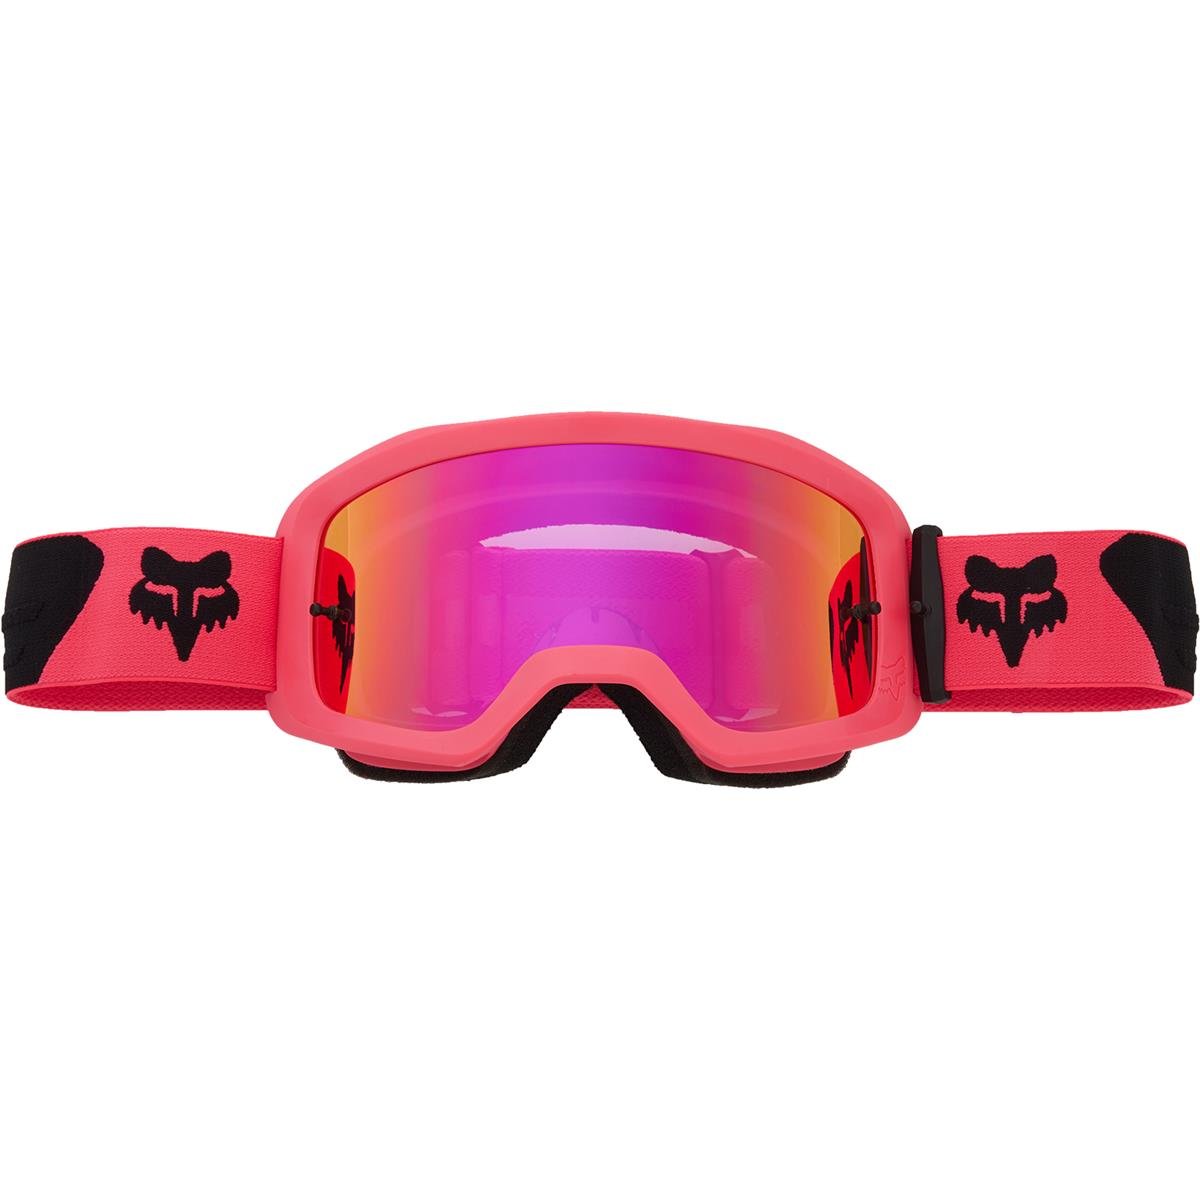 Fox Goggle Main Core - Spark - Pink, Mirrored